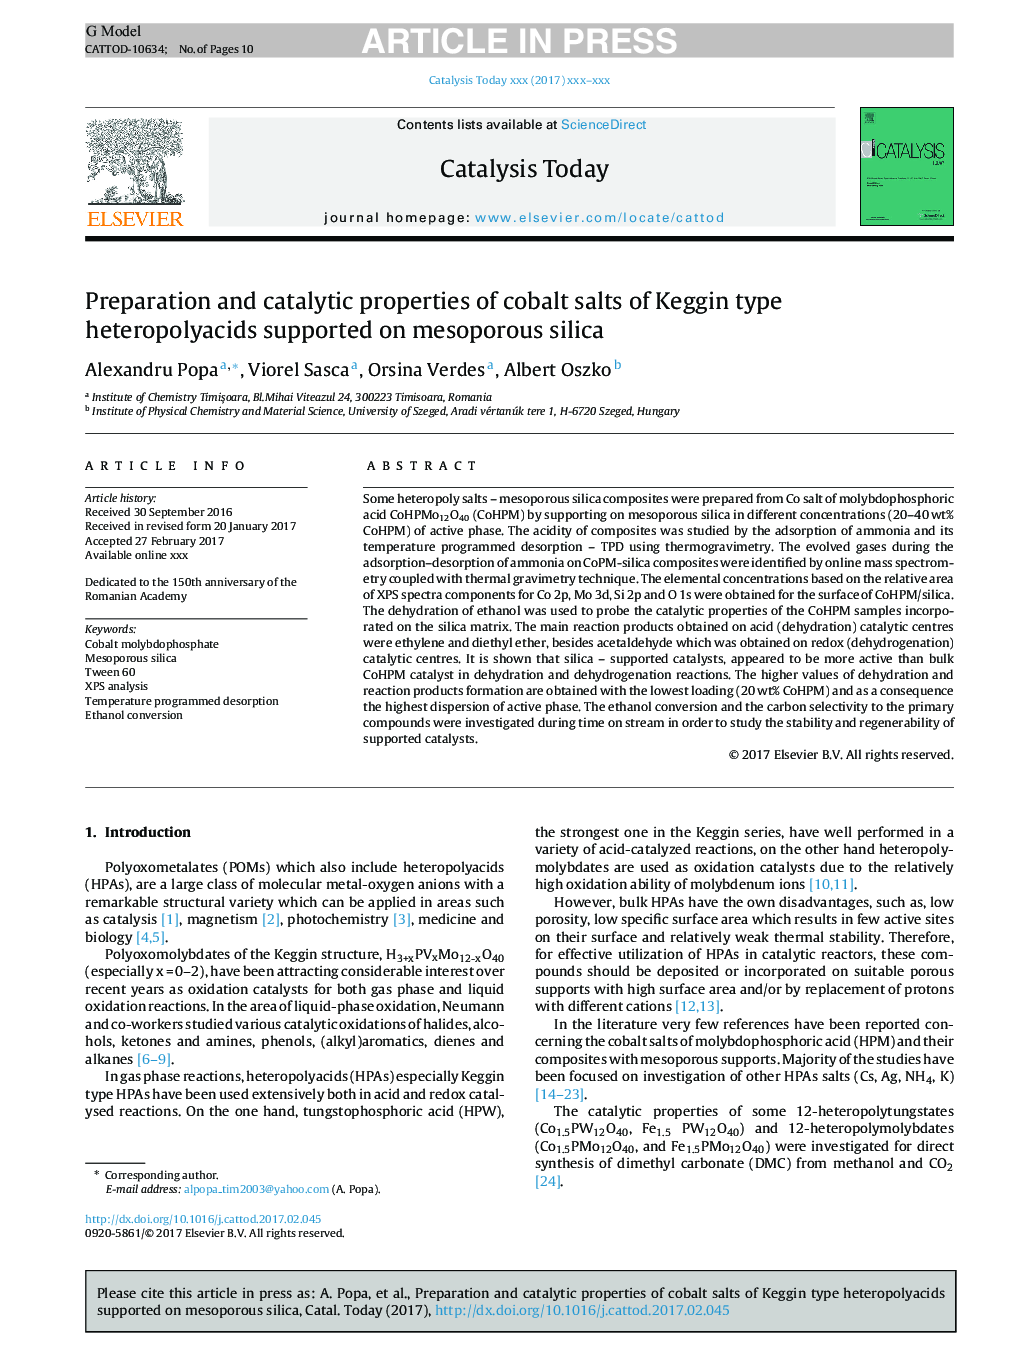 Preparation and catalytic properties of cobalt salts of Keggin type heteropolyacids supported on mesoporous silica